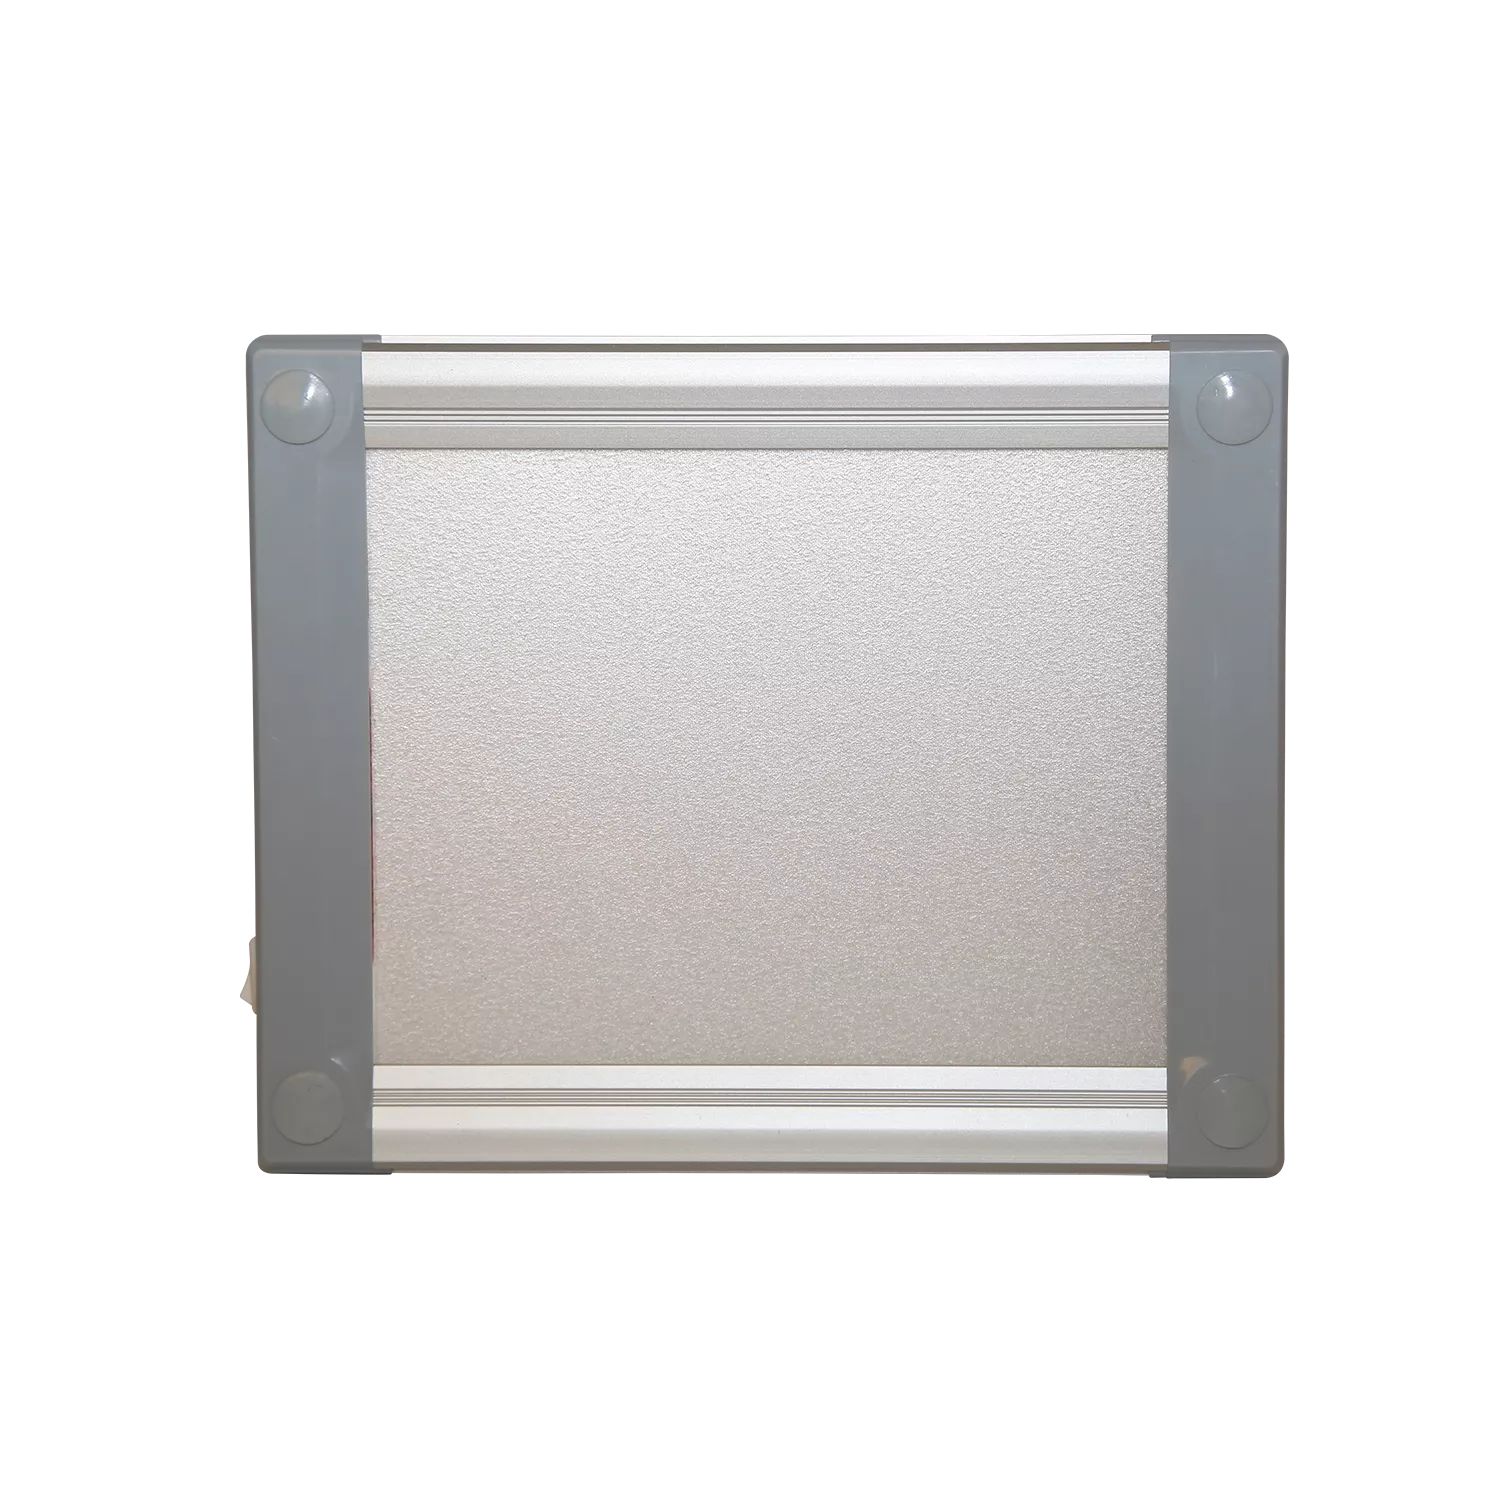 ECO EW0500 ECCO 42 LED Interior Flat Panel Light (7", Rectangle, Surface)